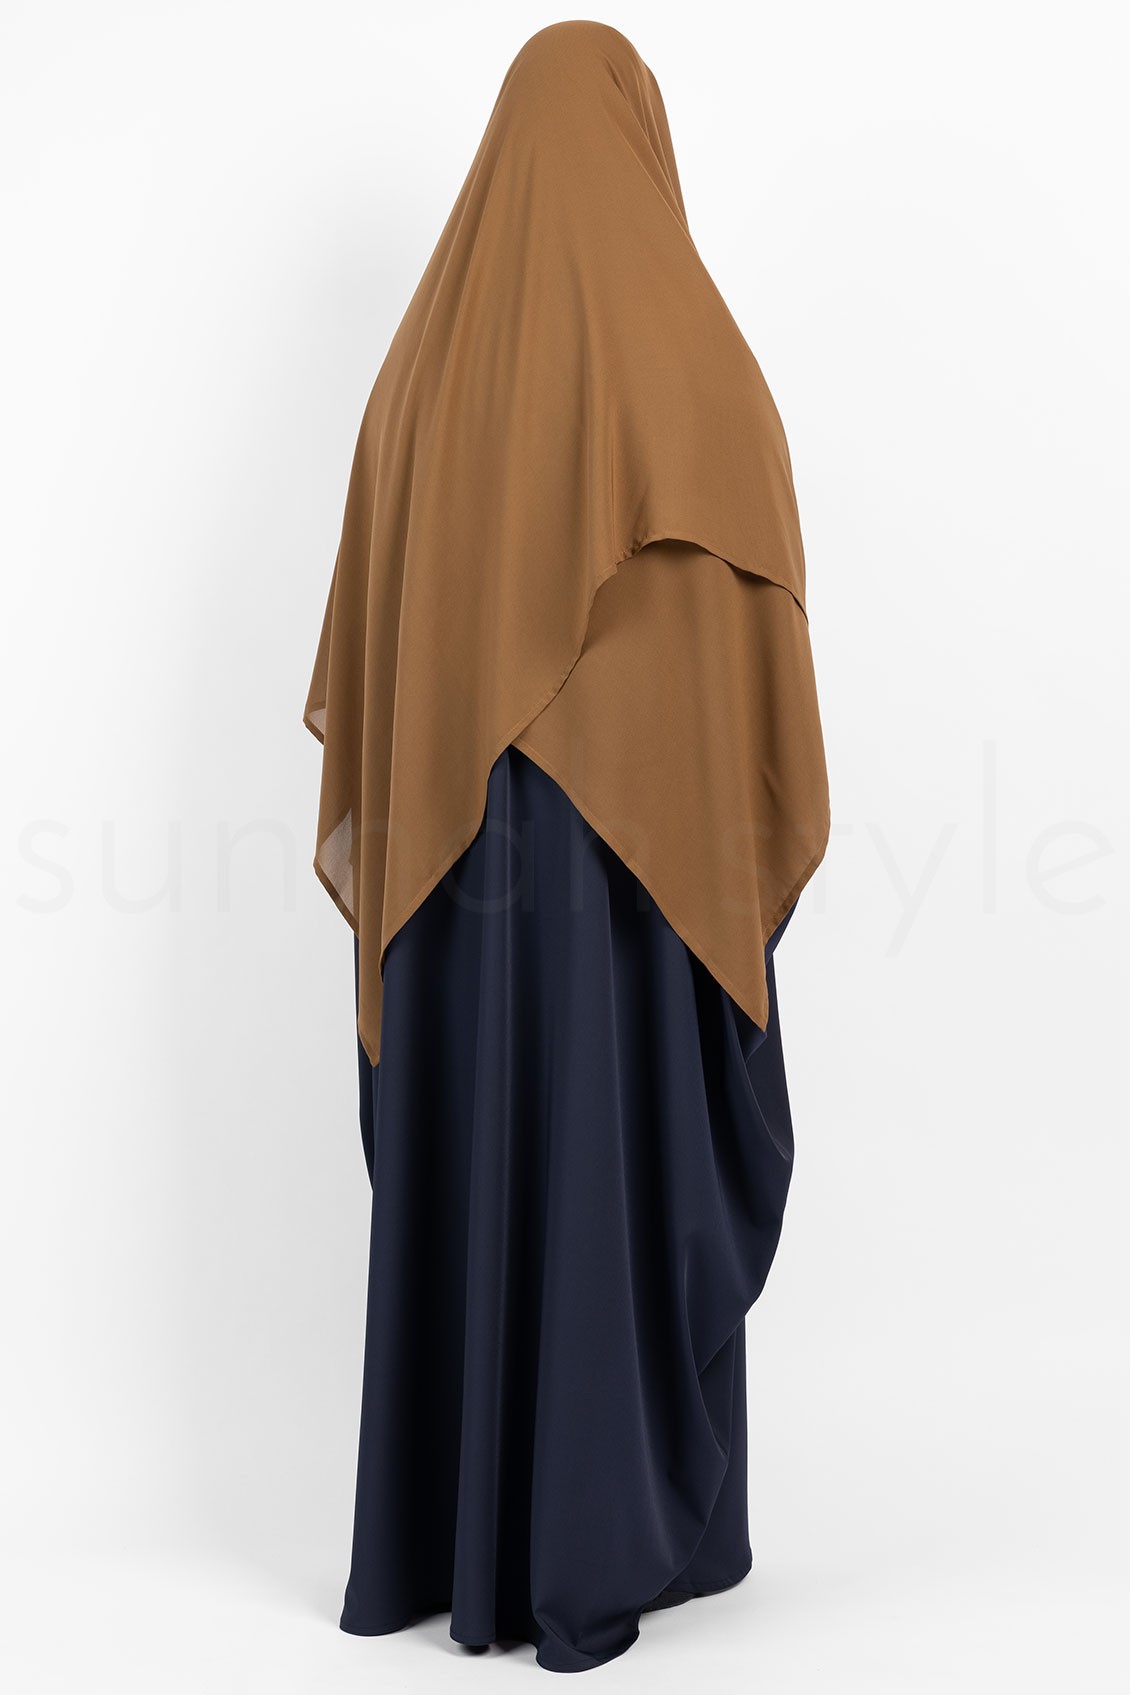 Sunnah Style Hooded Wrap Hijab Caramel